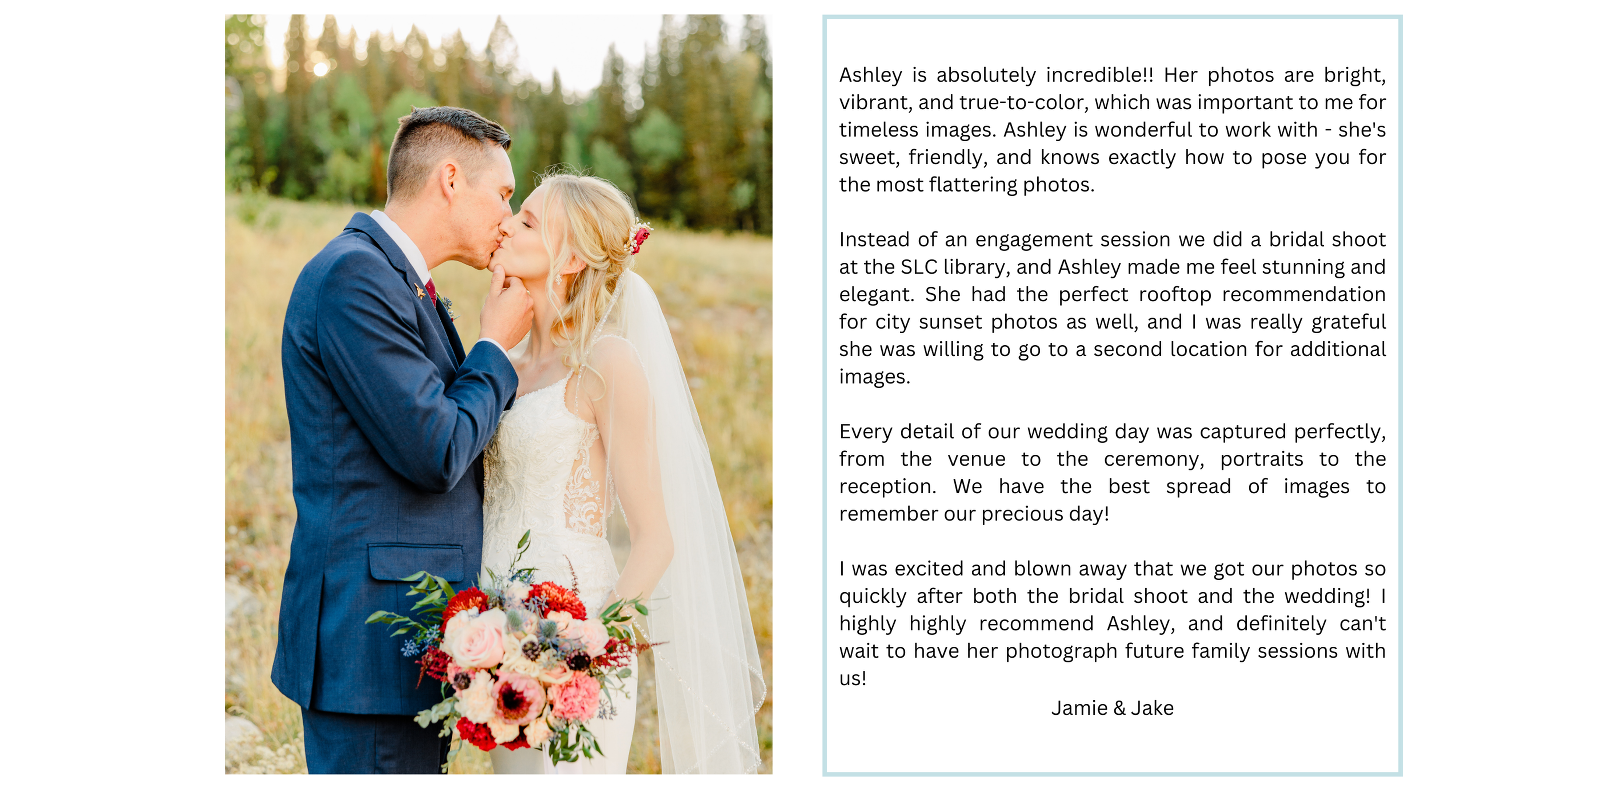 Best Utah Wedding Photographer - Client Review Ashley DeHart Photography